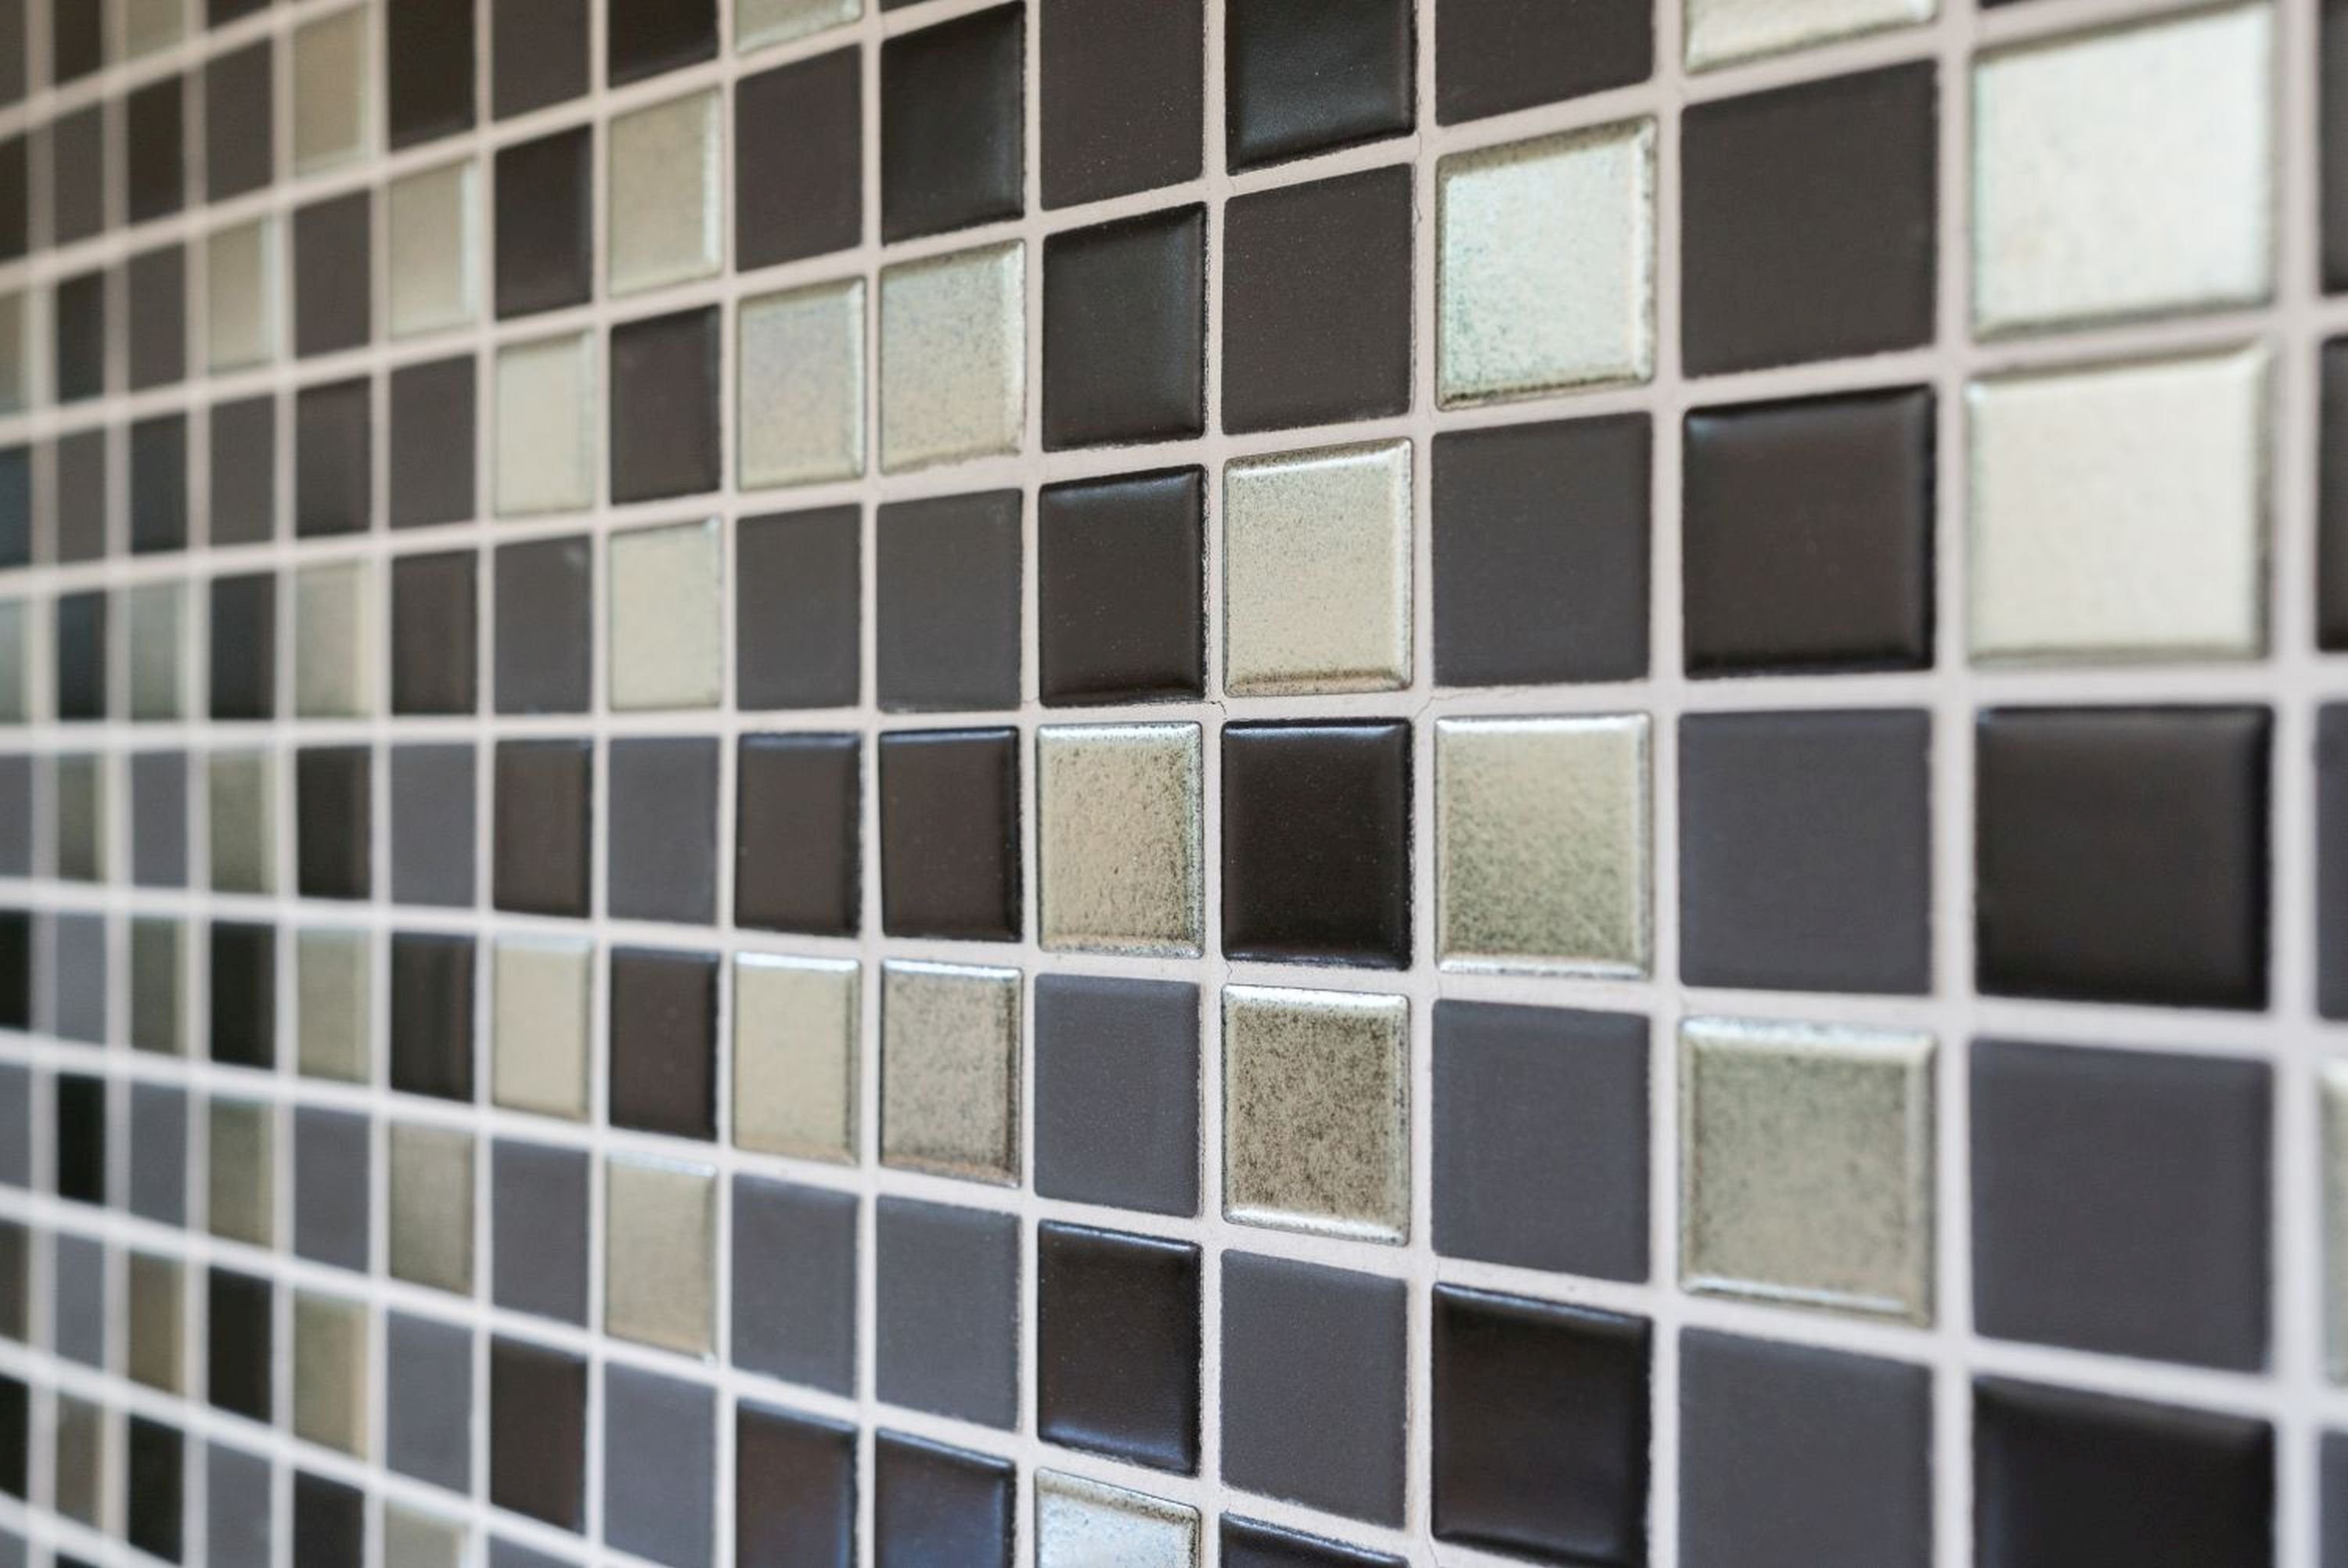 schwarz silber Küche Keramik Mosaik Mosaikfliesen Mosani anthrazit chrome